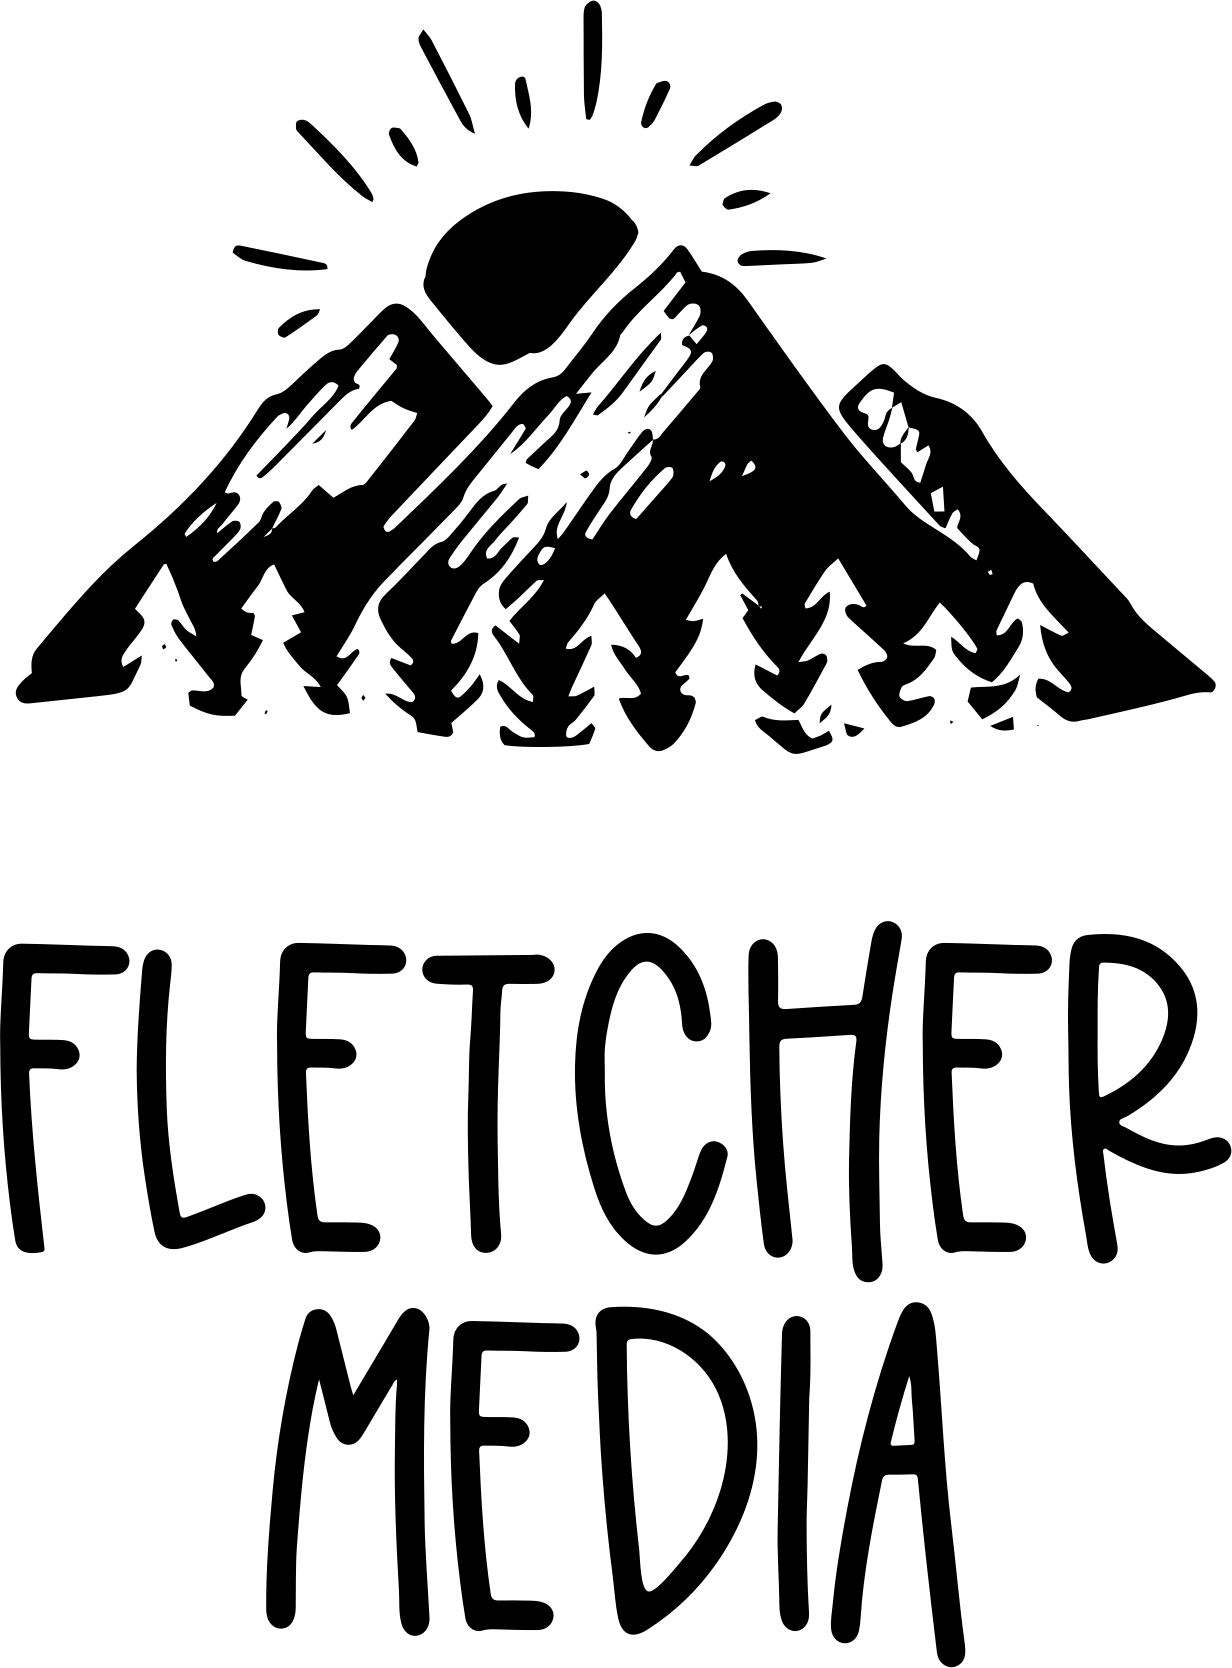 Fletcher Media